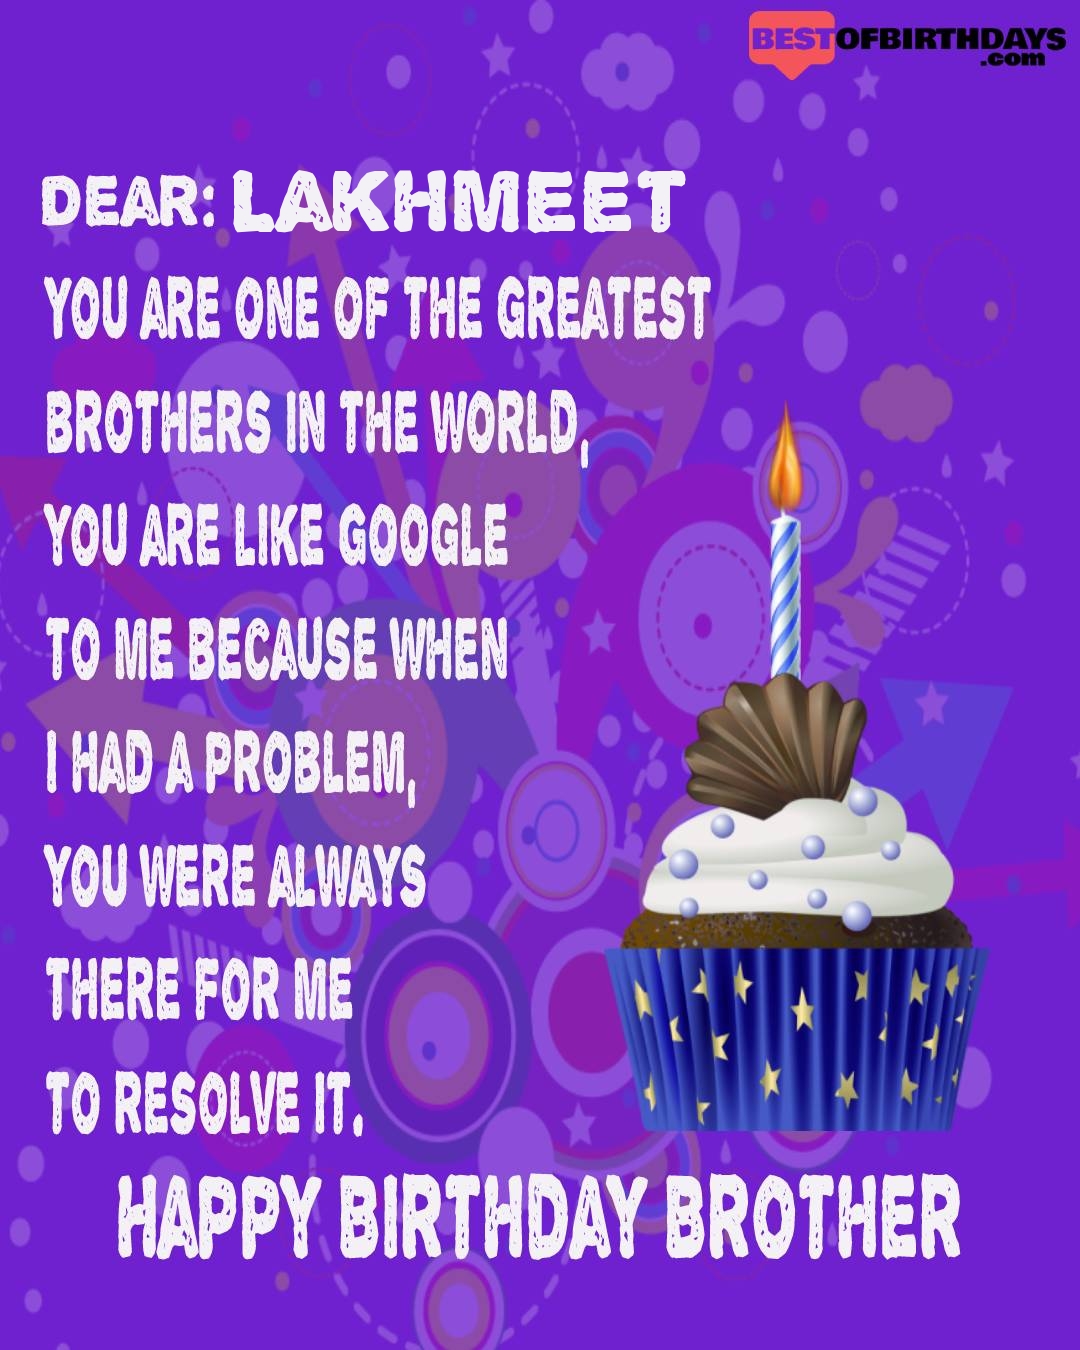 Happy birthday lakhmeet bhai brother bro